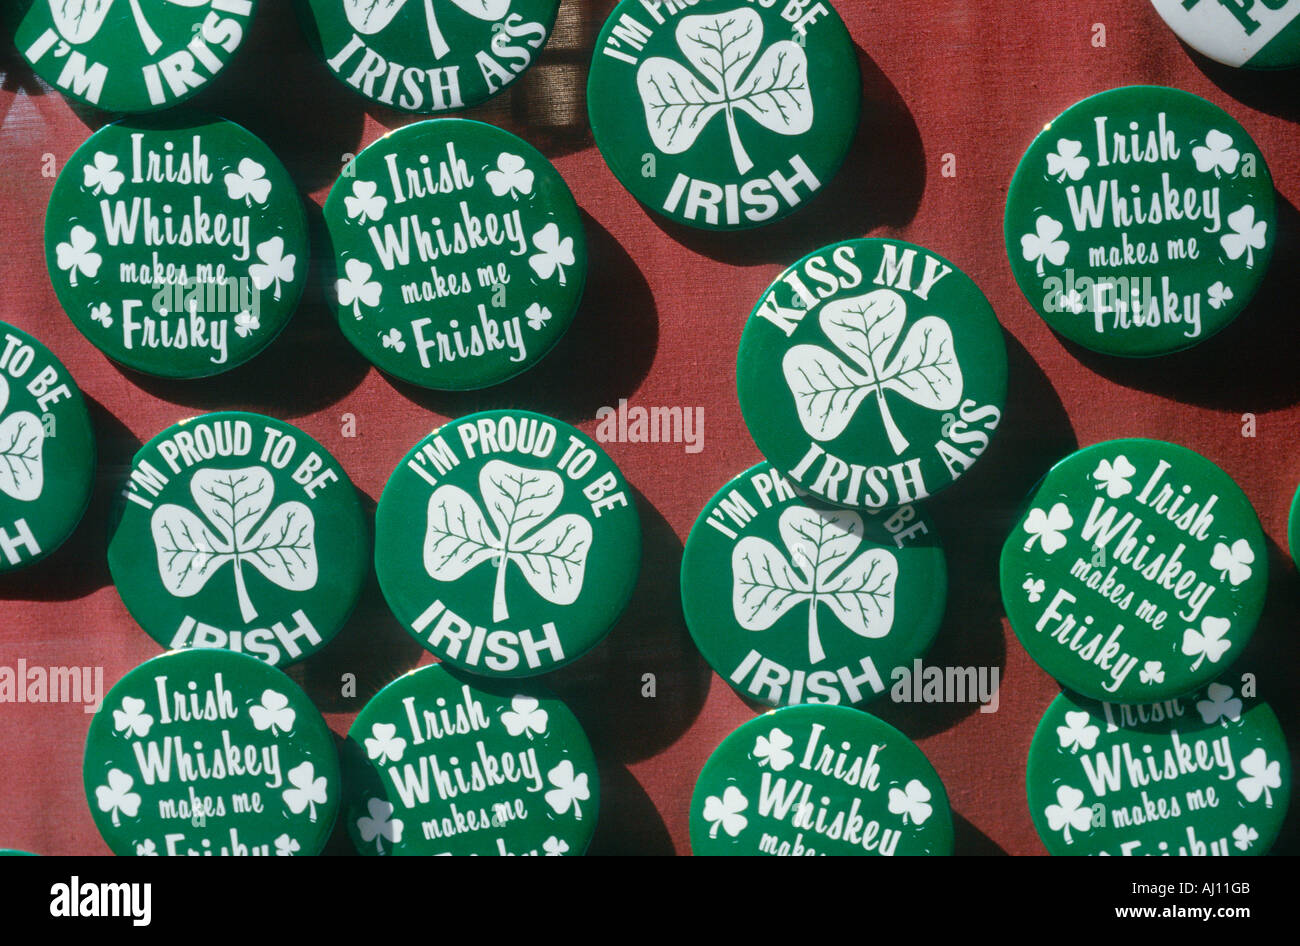 St Patrick s Day buttons displaying Irish pride Stock Photo